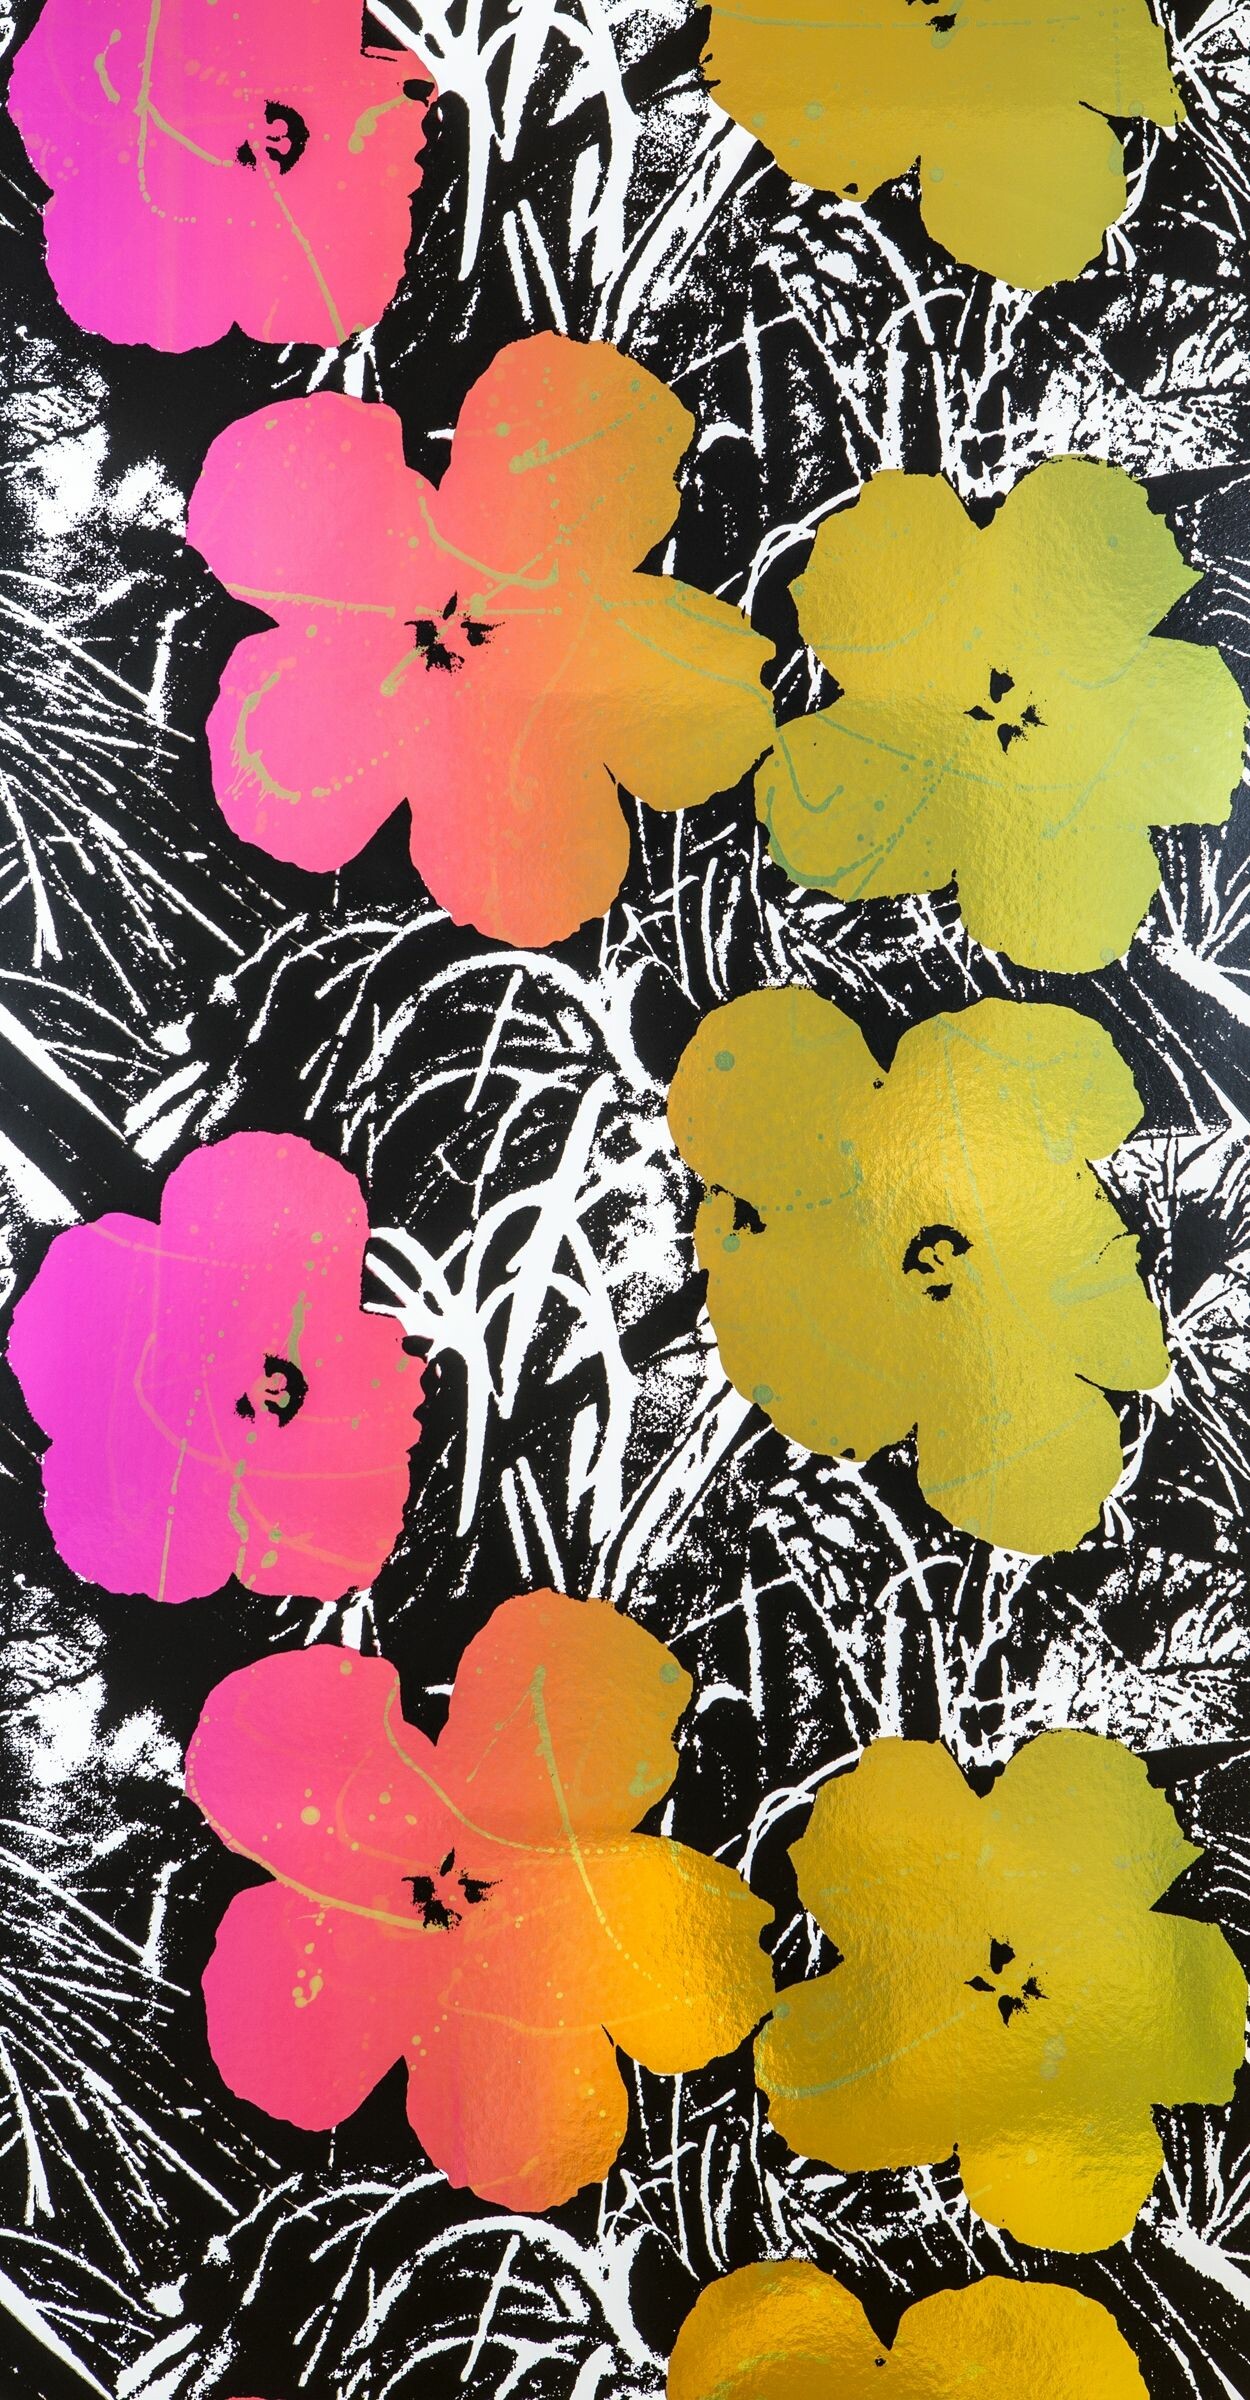 Flavor Paper Andy Warhol Flowers Wallpaper  Andy warhol flowers Flavor  paper wallpaper Wallpaper